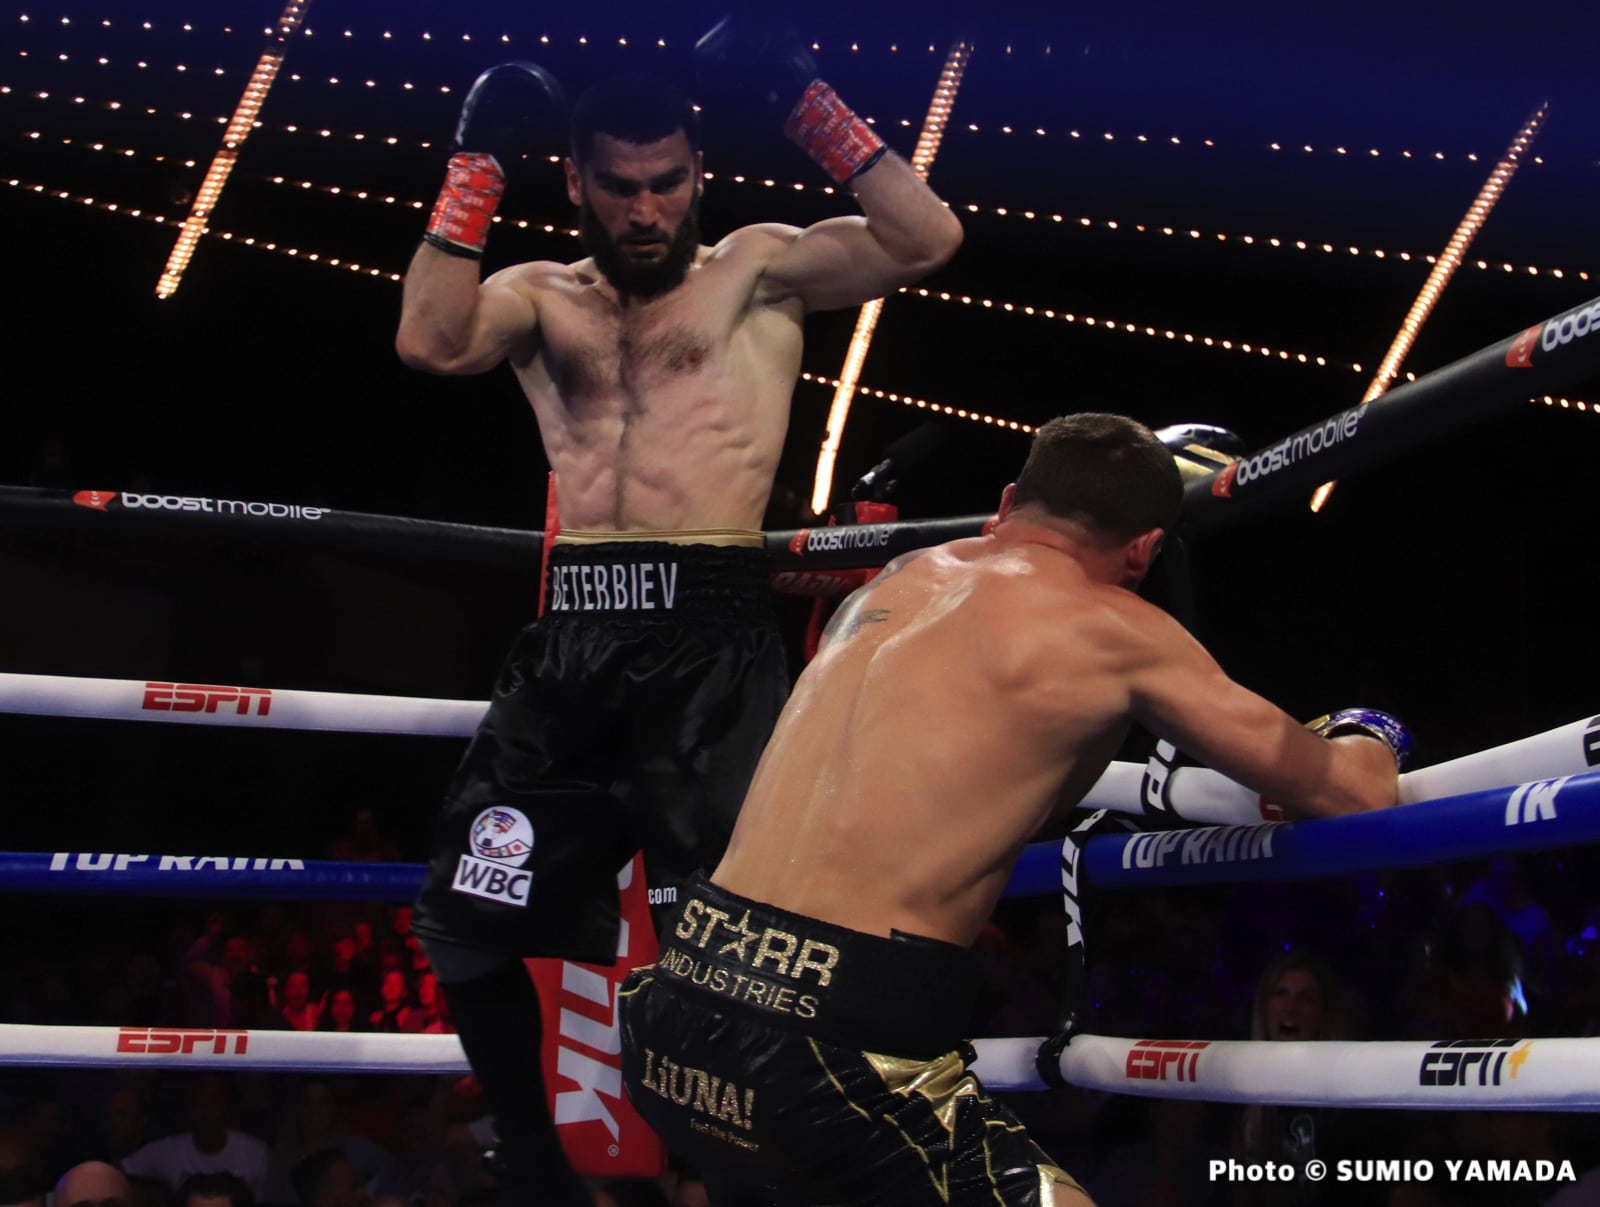 Artur Beterbiev boxing image / photo